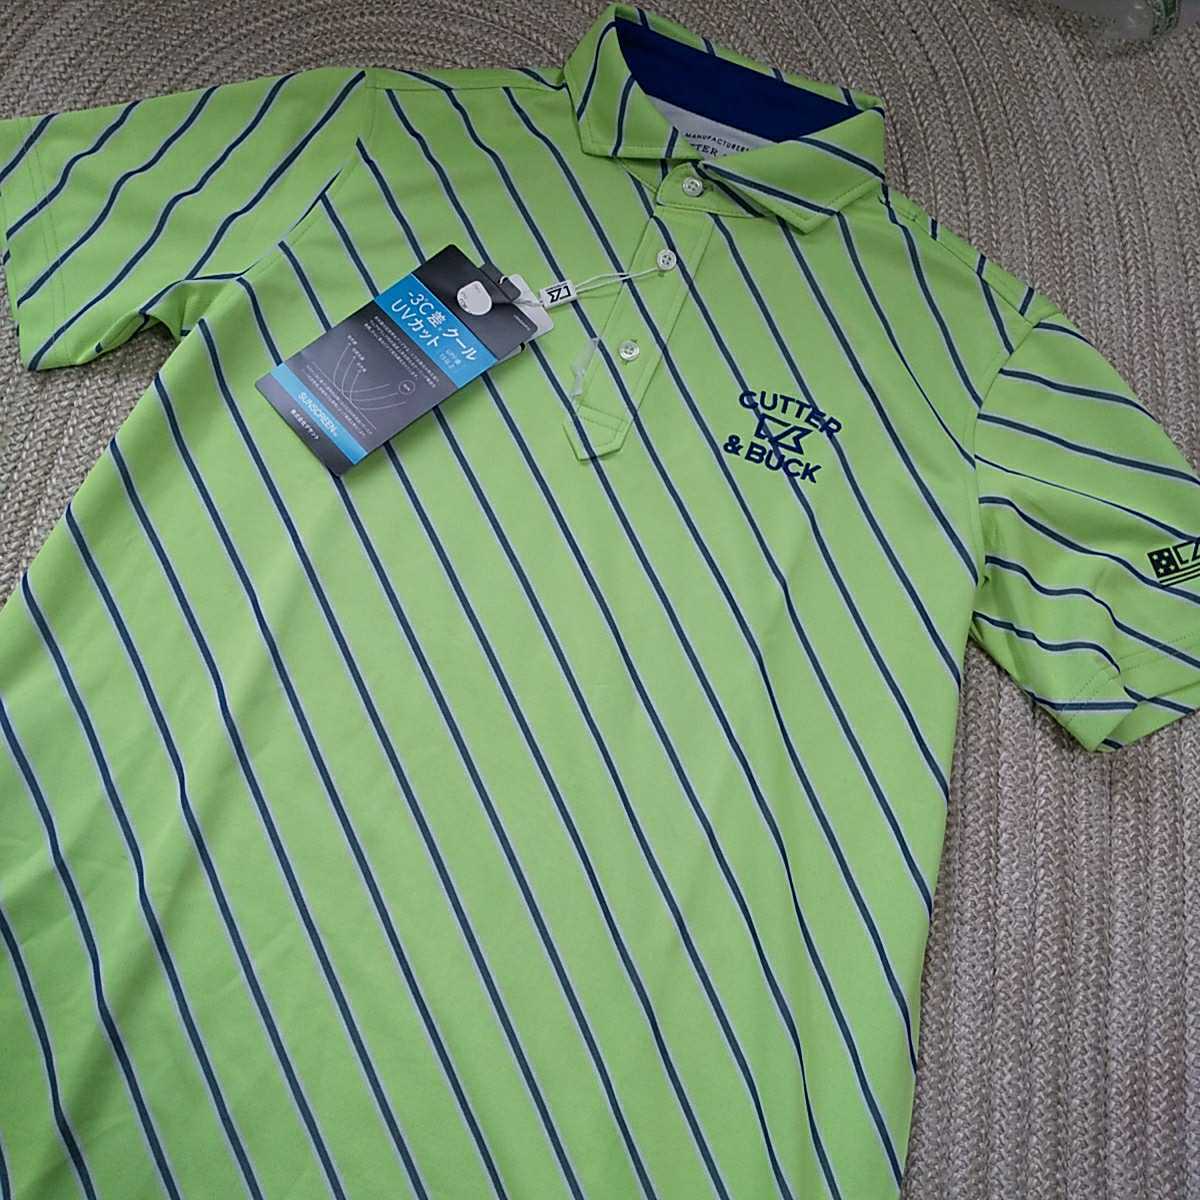 Новая цена списка 10450 Cutter и обратная рубашка поло с коротким рукавом M Yellow -Green Motion3d Sunsthrain UV Cut -Fast -Dry Horizontal Golf Men